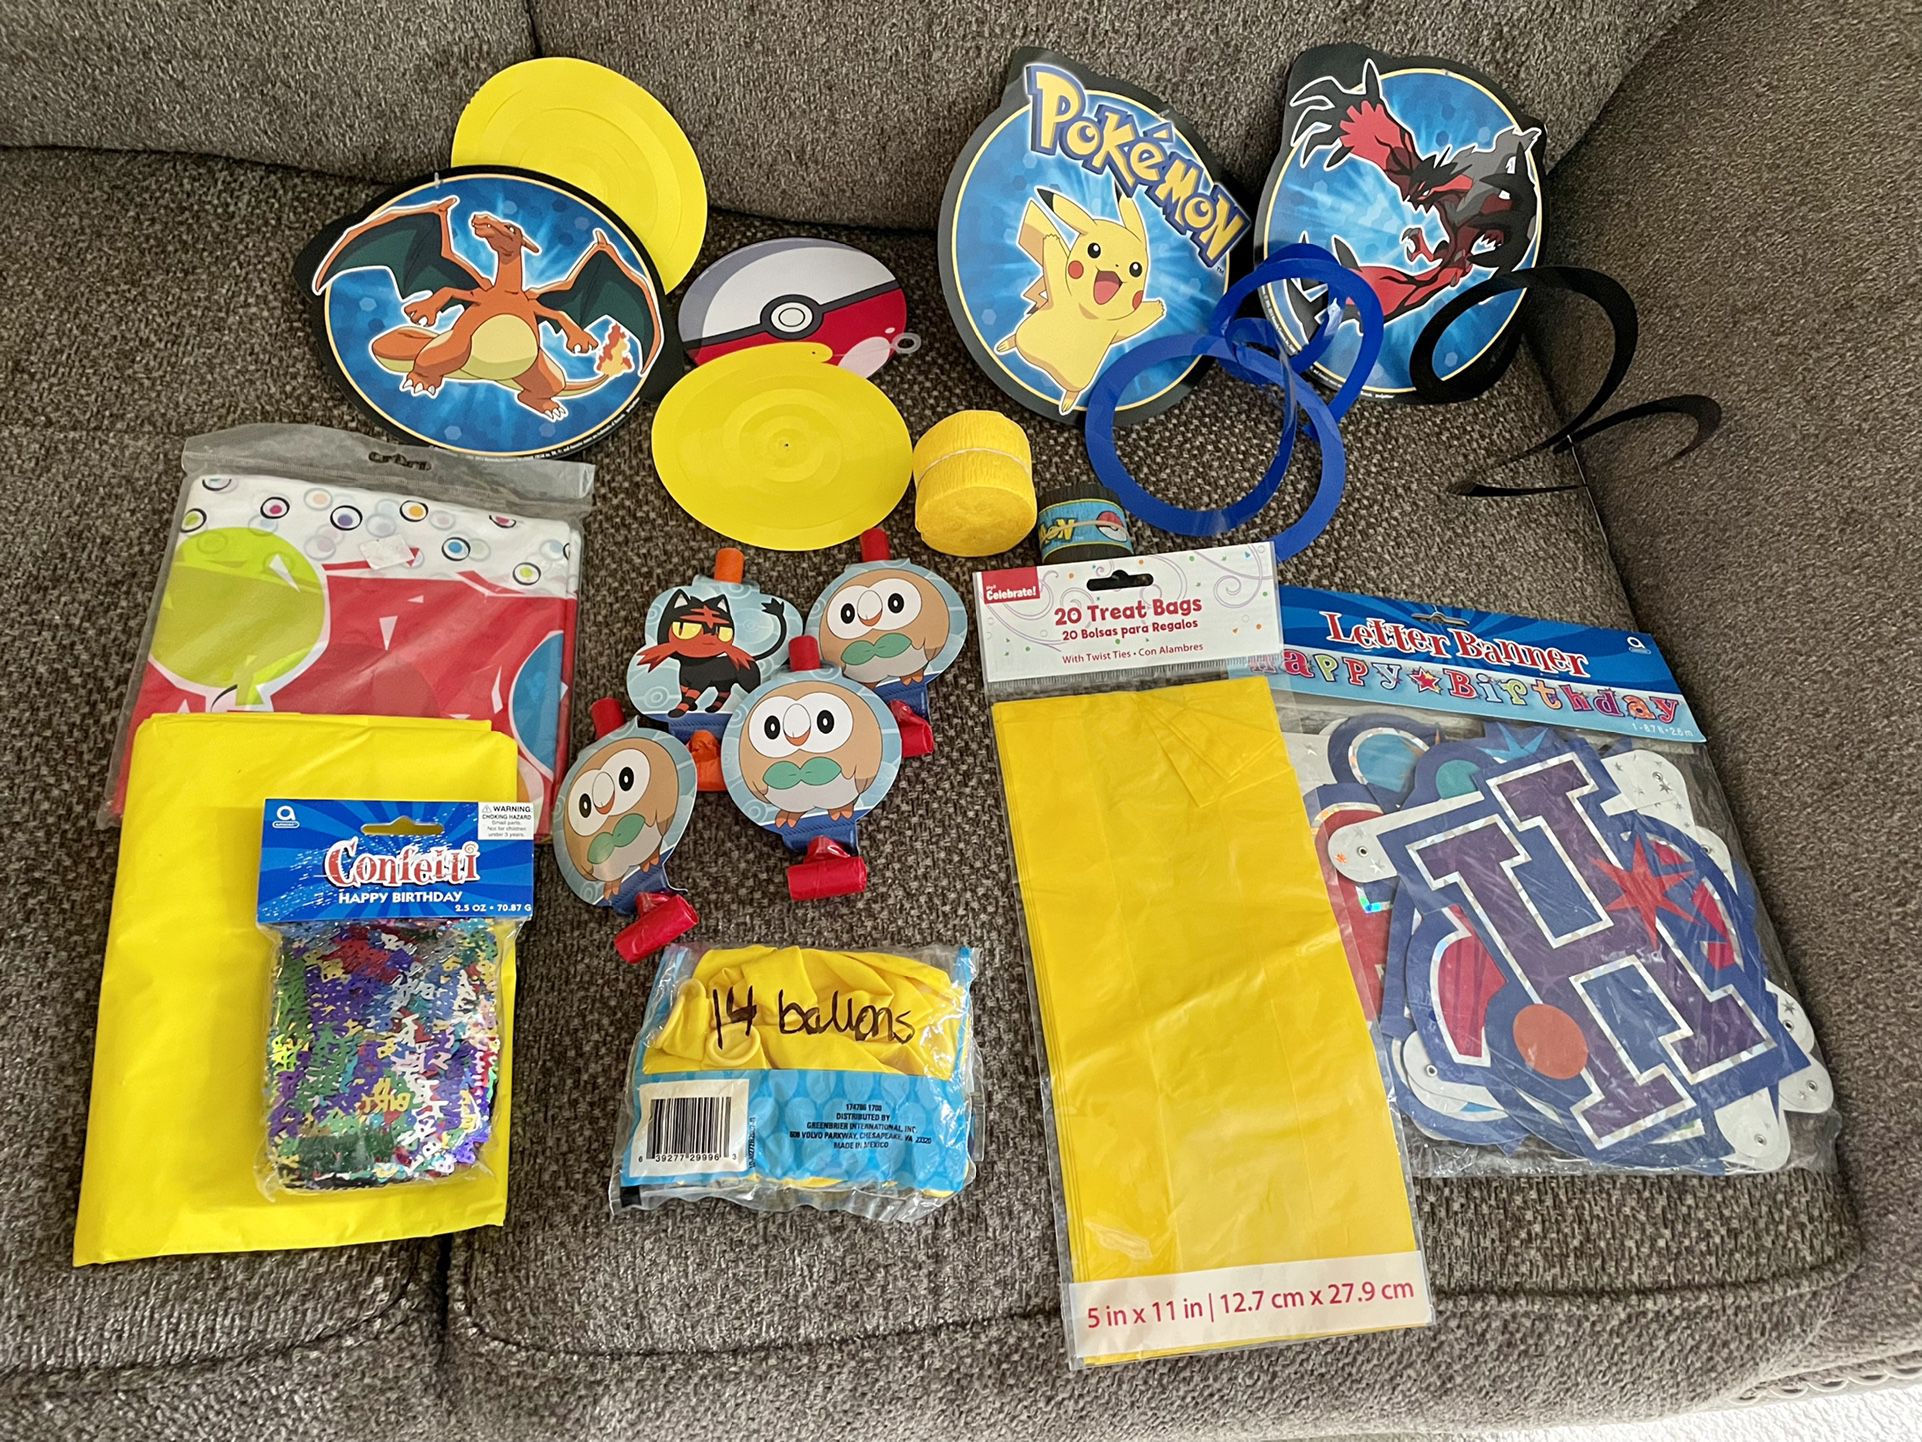 Happy Birthday decorations and Pokémon Decorations